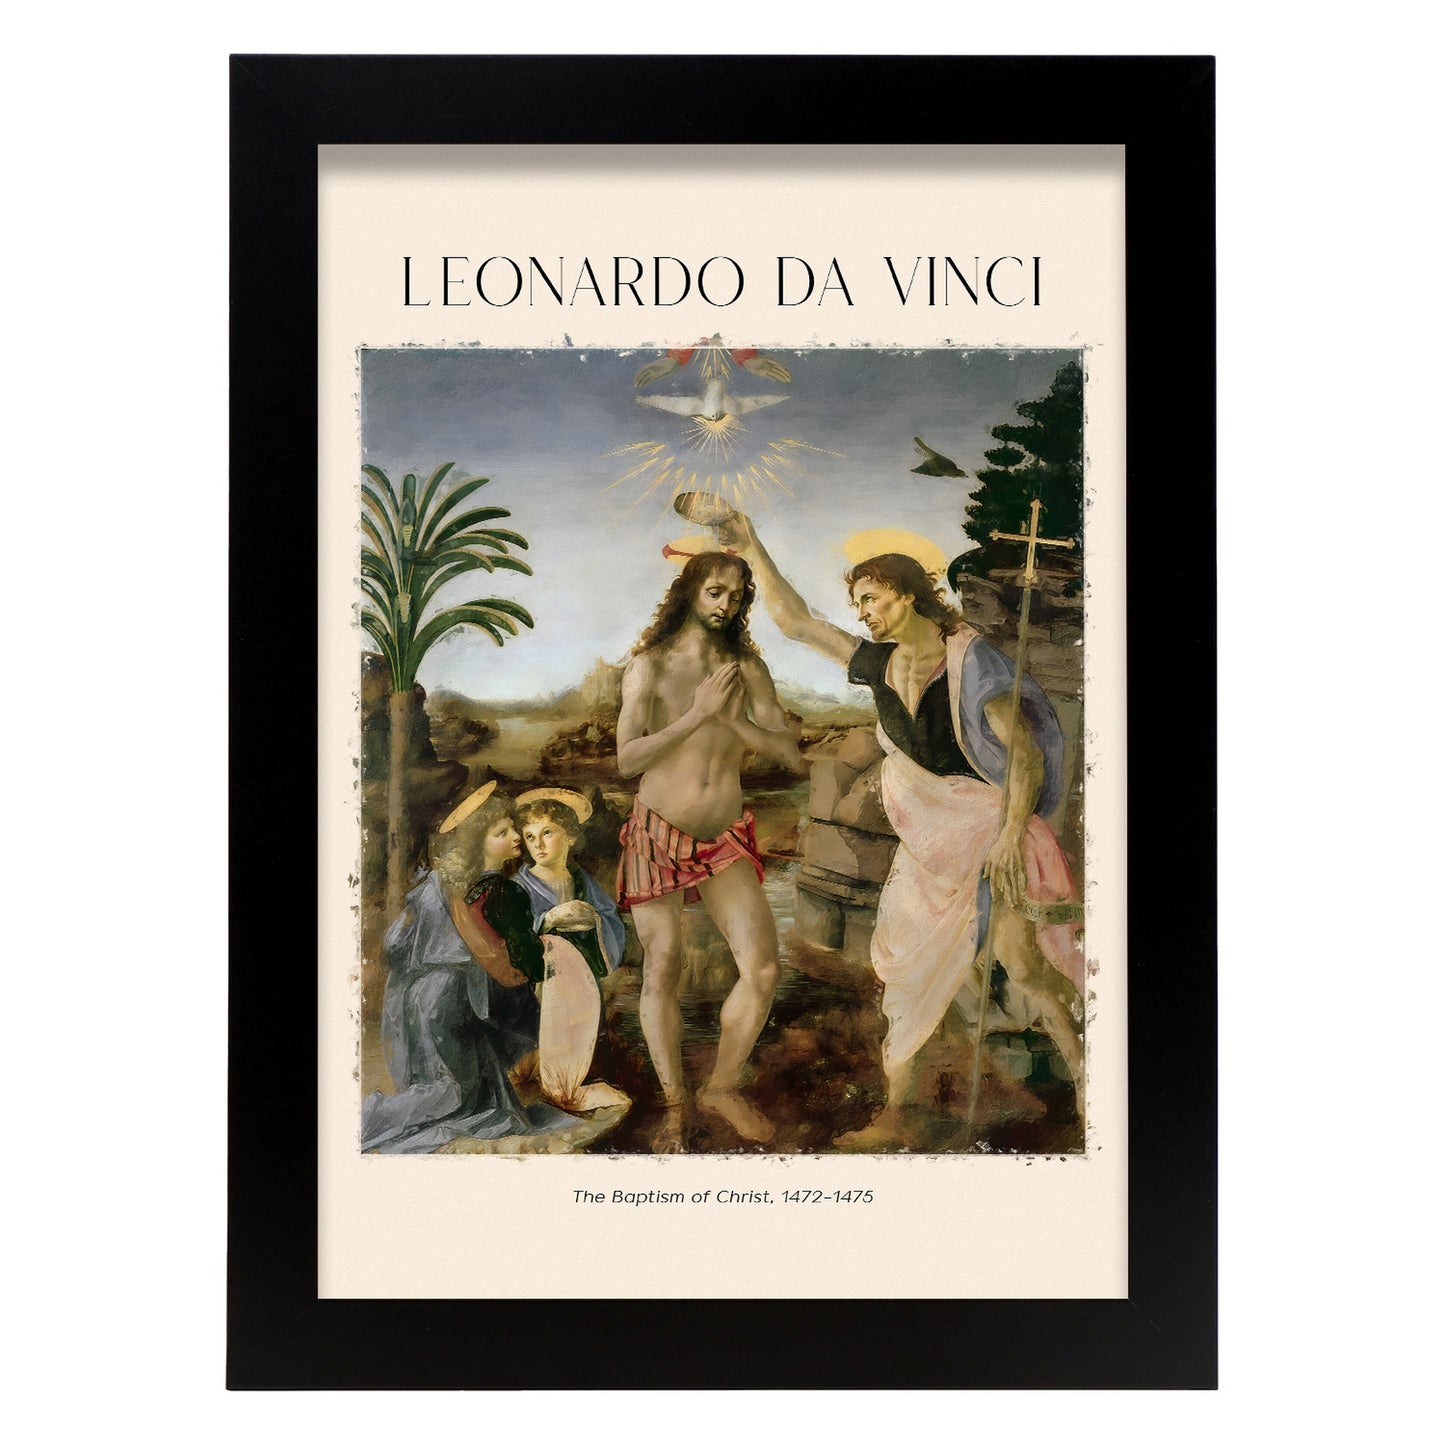 Lámina de Bautismo de Cristo inspirada en Leonardo da Vinci